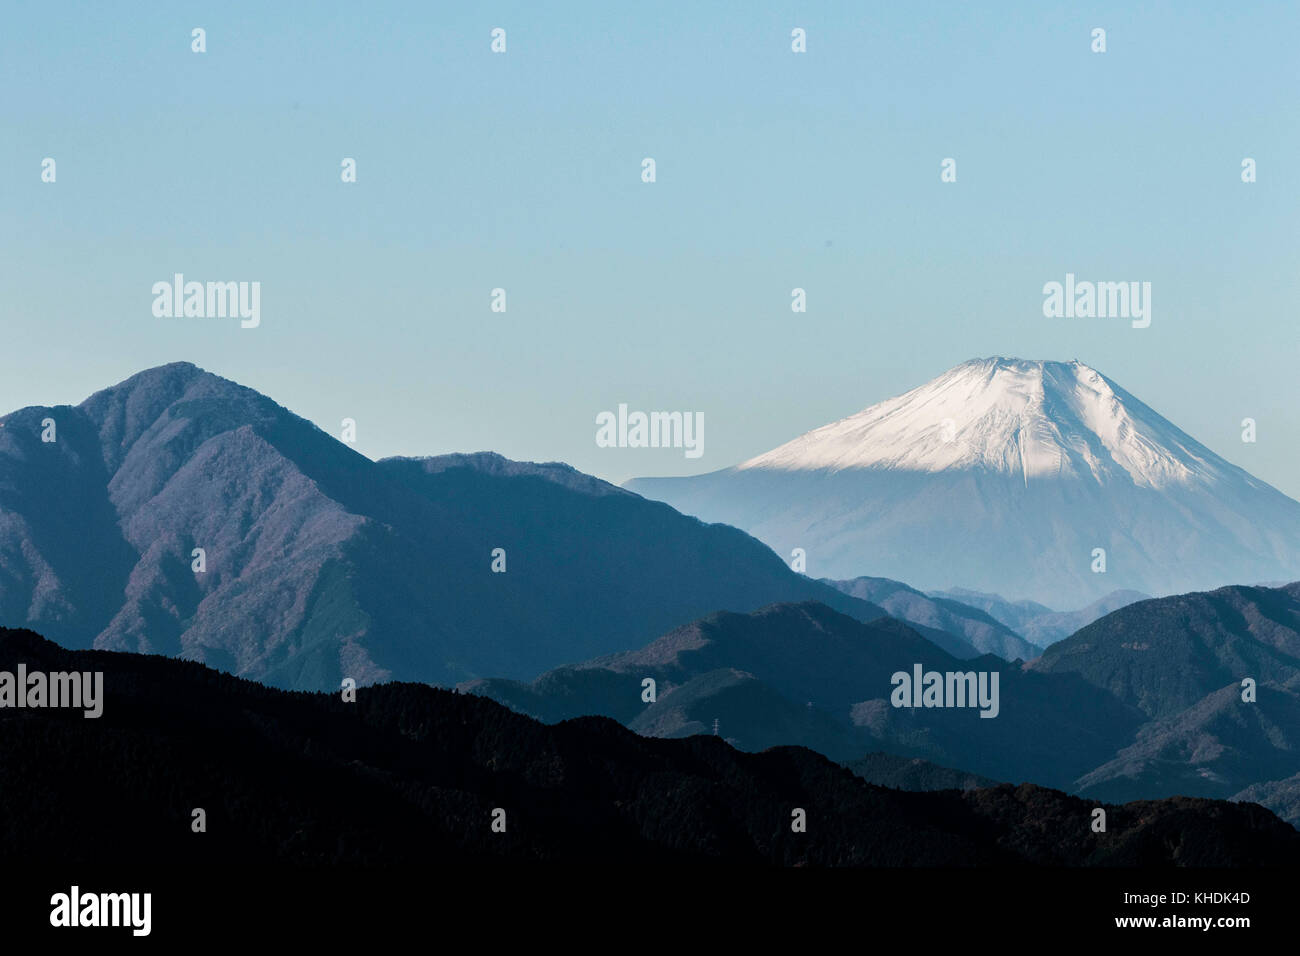 Mount Fuji im Bild von oben Takao montieren. Credit: yuichiro tashiro Stockfoto